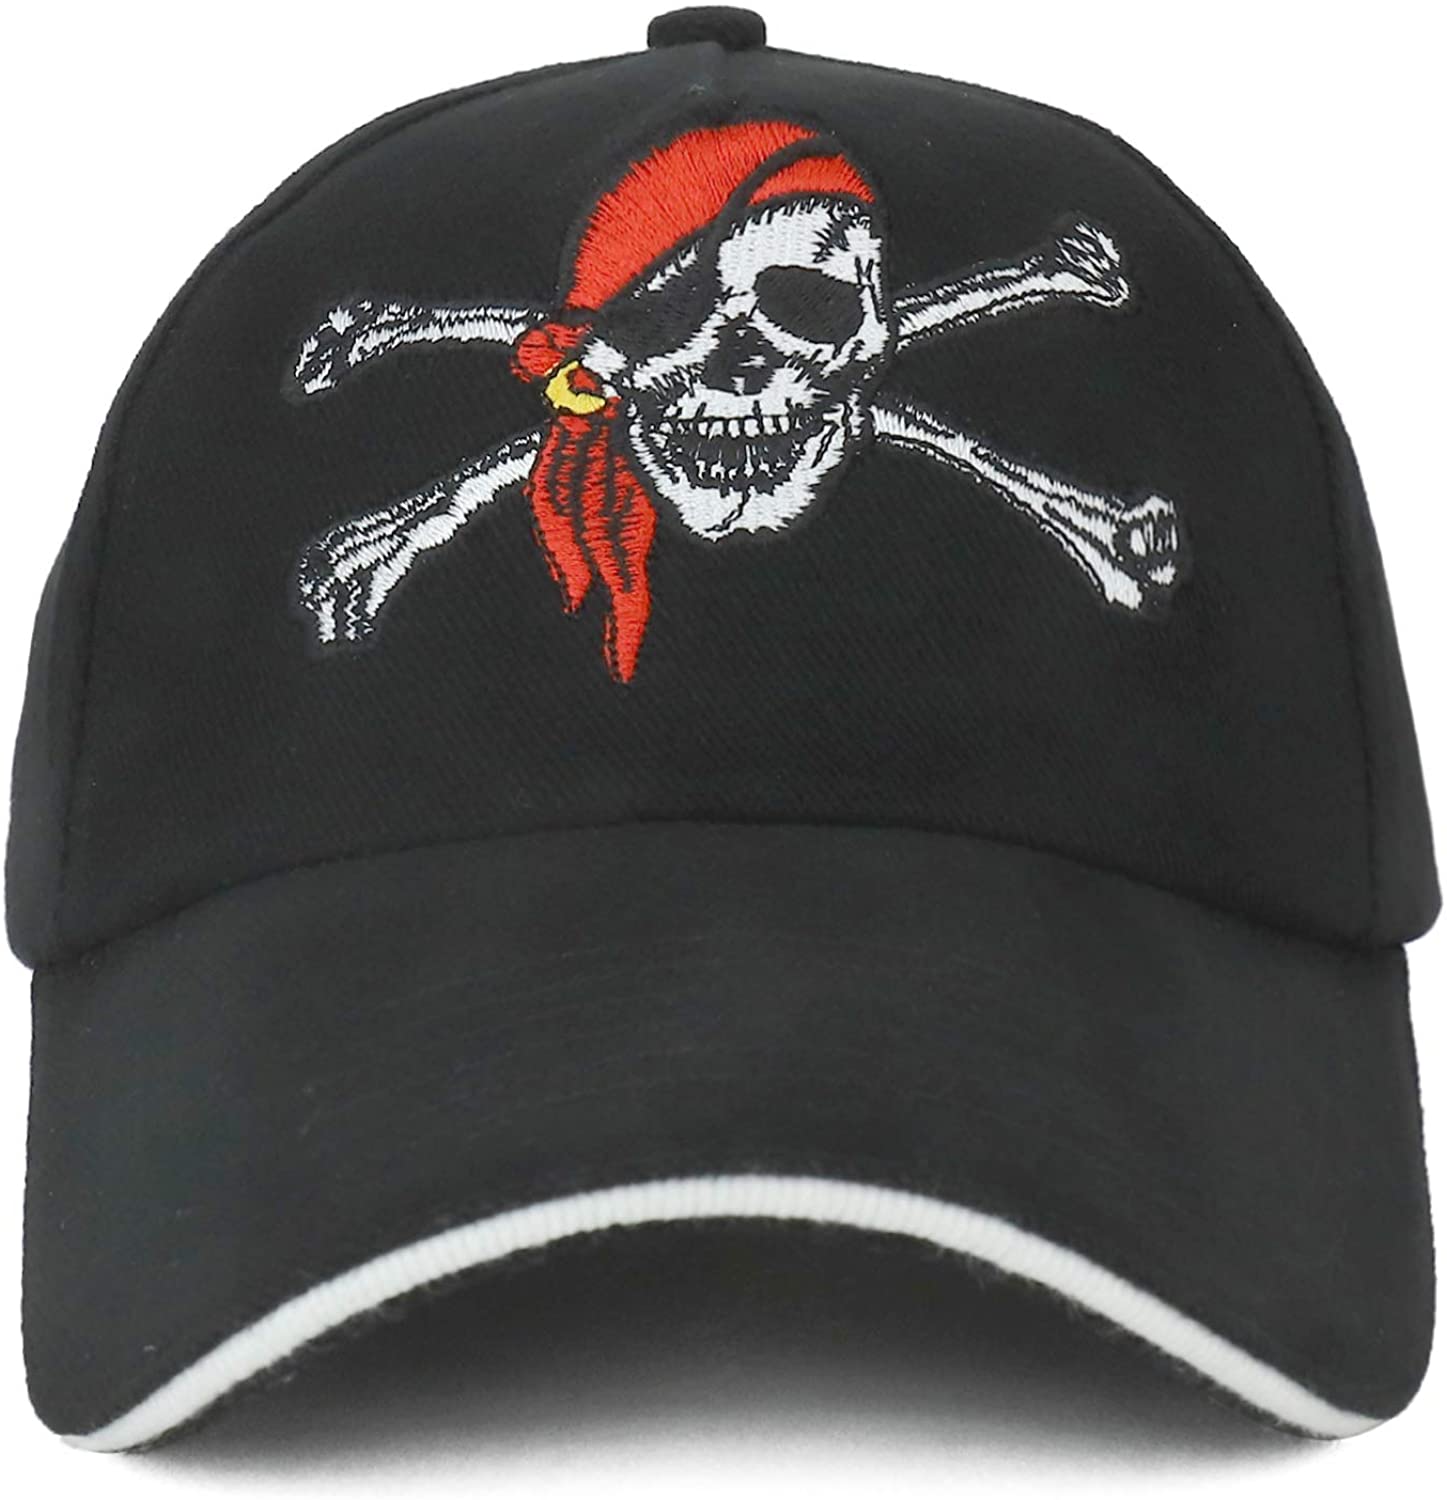 Armycrew Pirate Skull Embroidered Sandwich Bill 5 Panel Cotton Cap